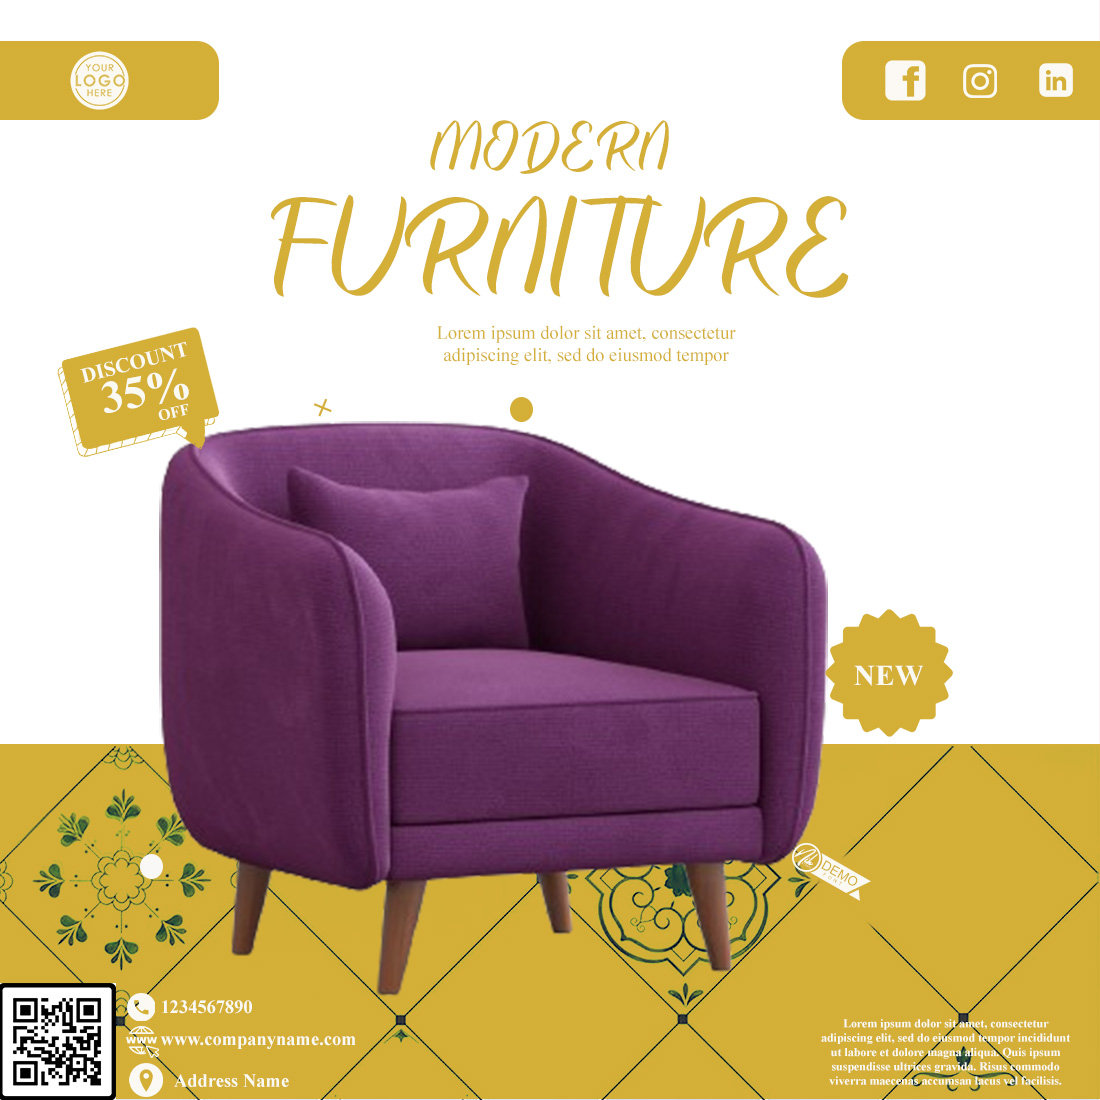 Furniture Social Media Post preview image.